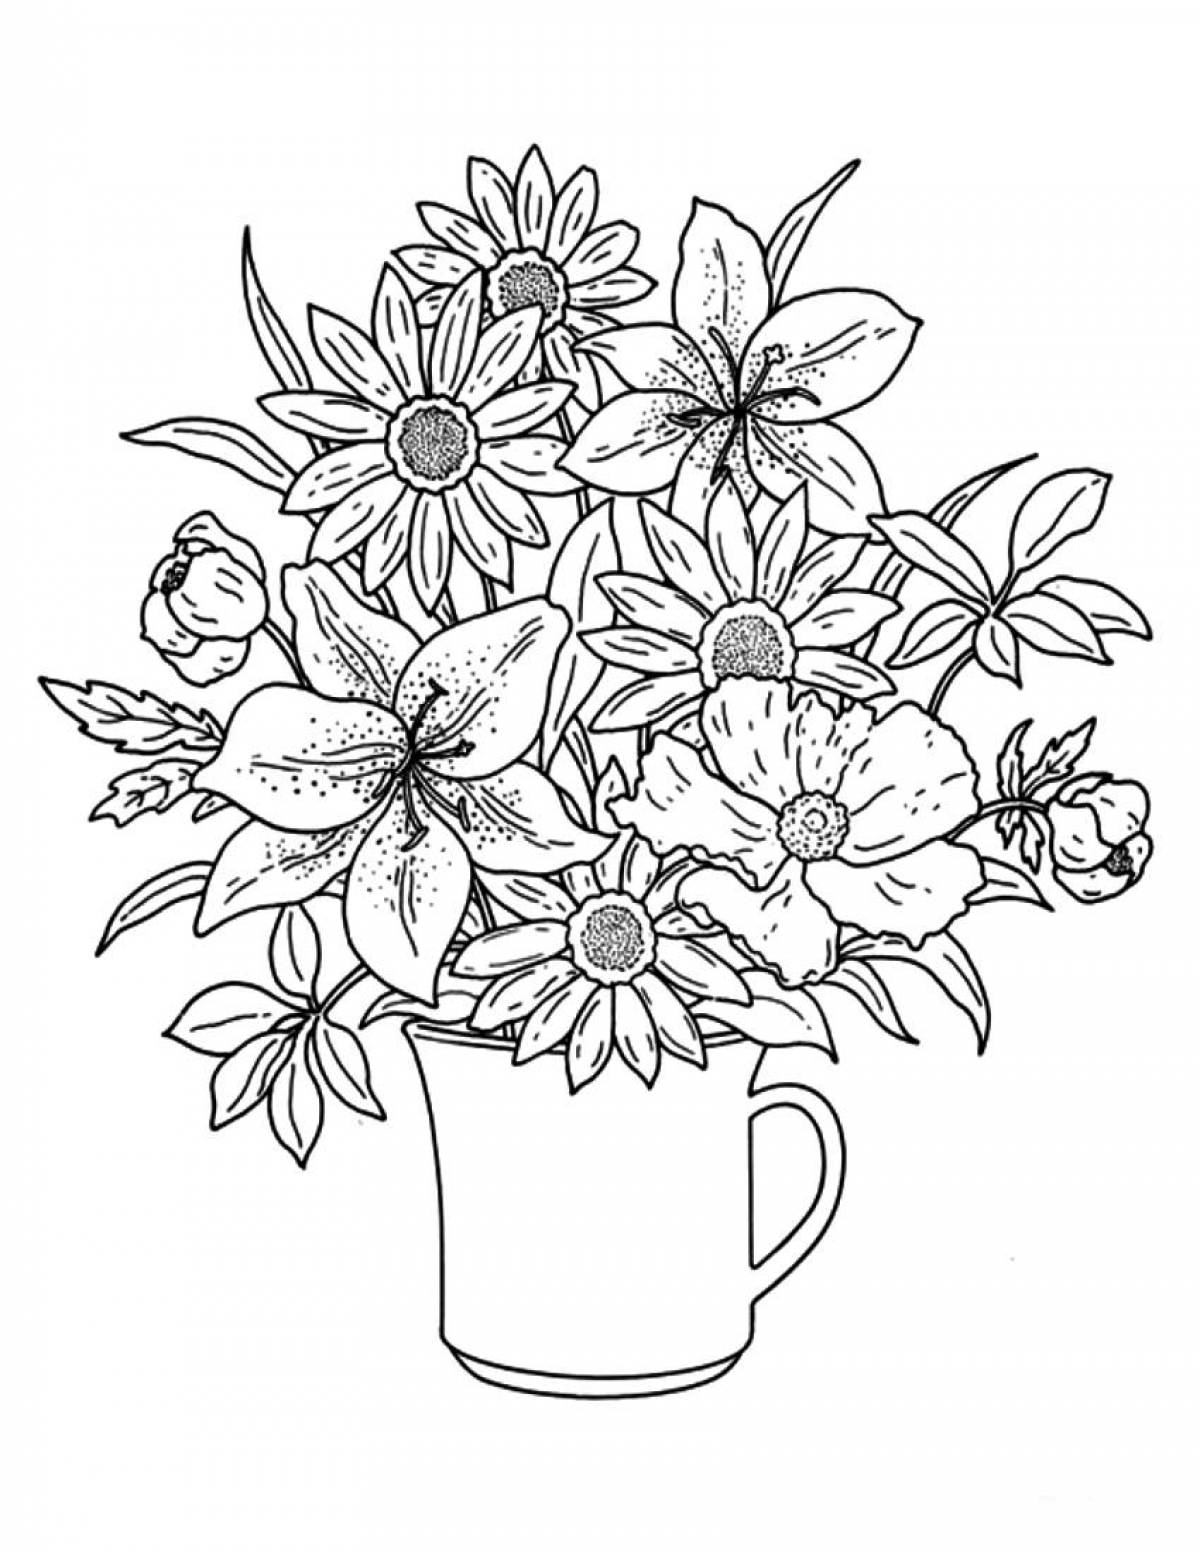 Flowers in a mug